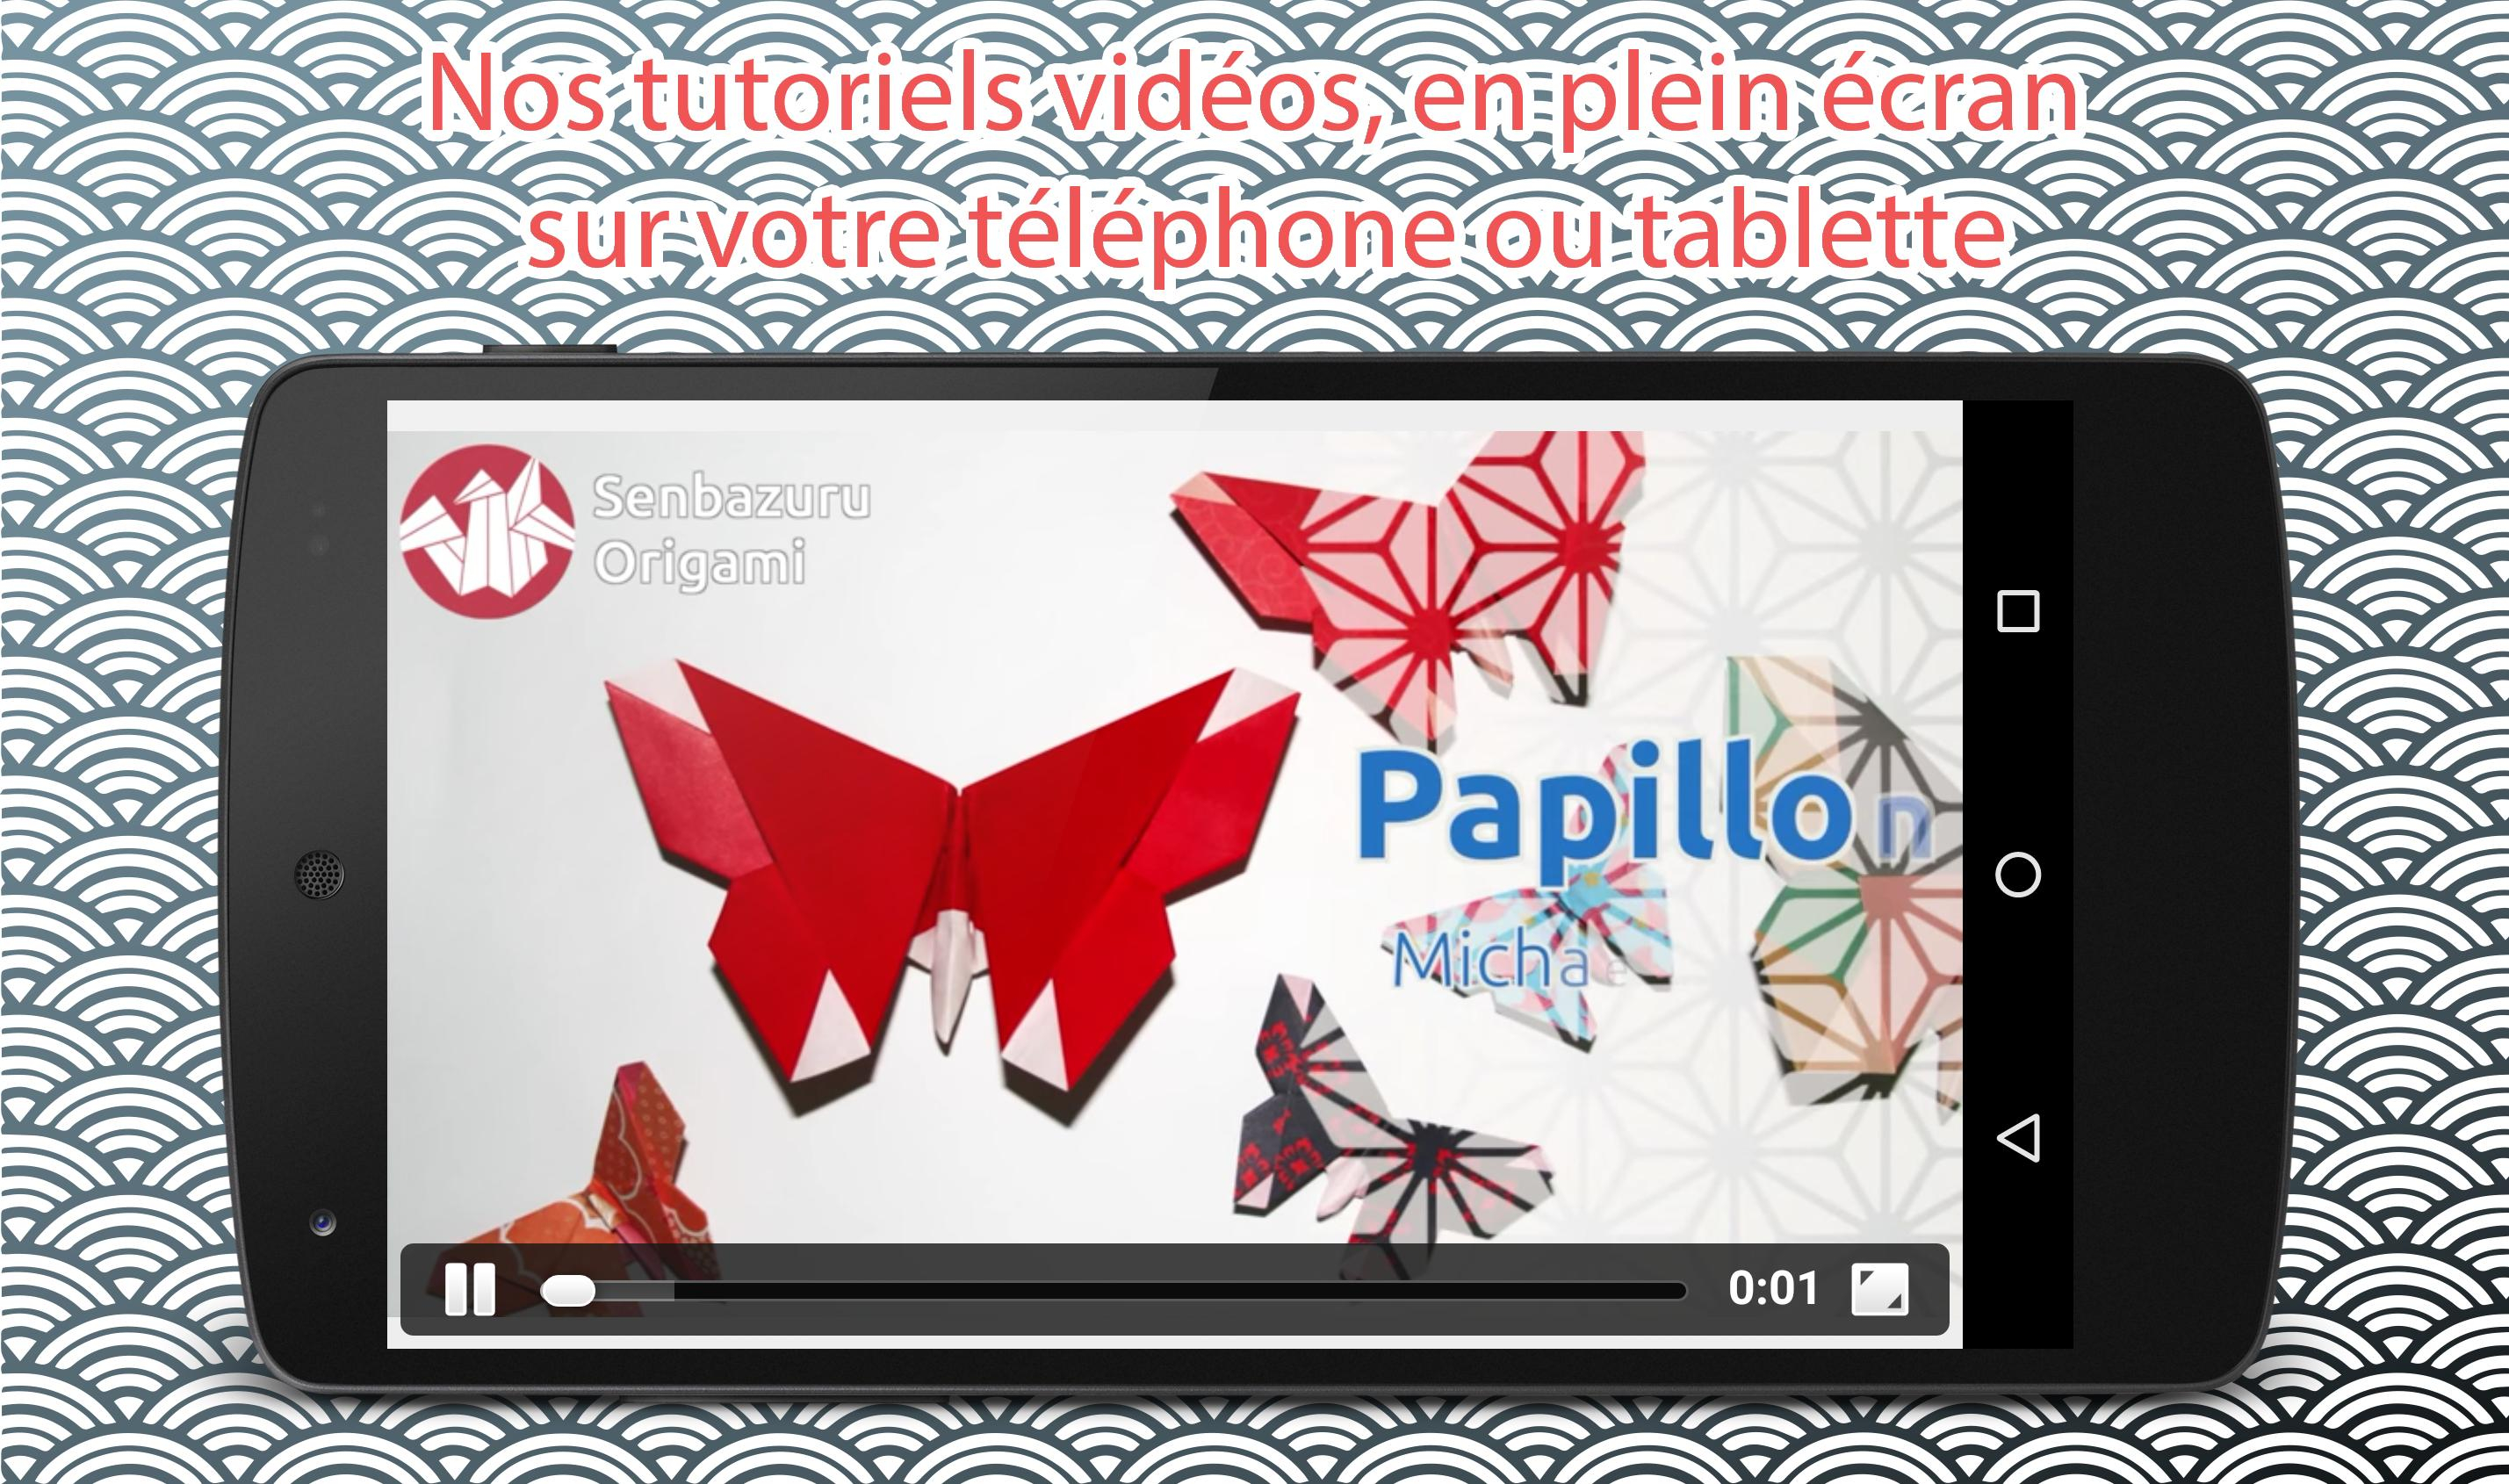 Download Origami Videos Senbazuru Origami Tutoriels For Android Apk Download